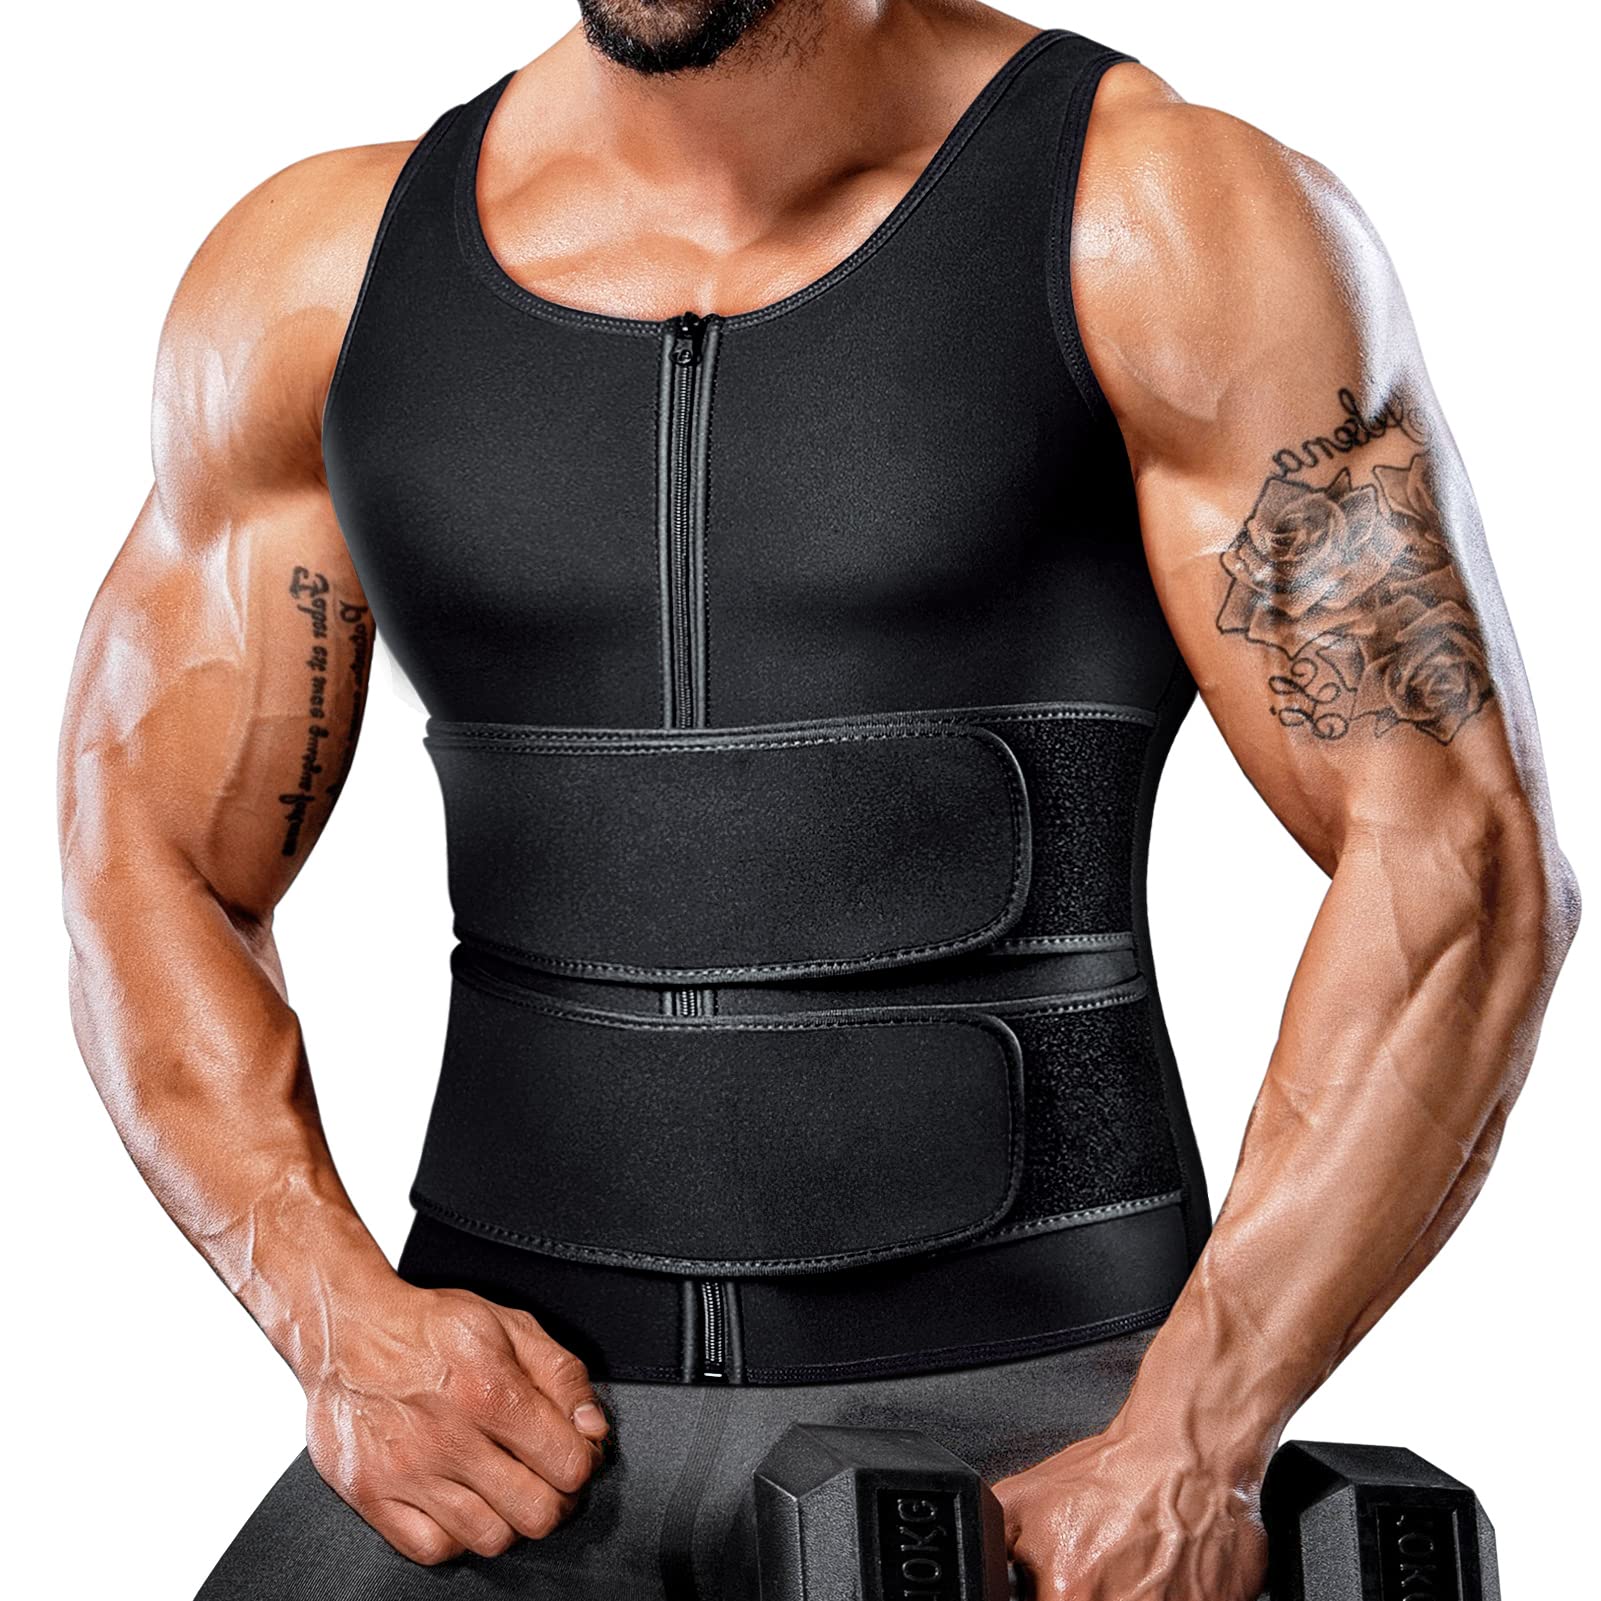  Sauna Waist Trainer For Women Long Torso Plus Size Sweating  Belts Zipper Bones Workout Trimmer Neoprene Exercise Black 6XL